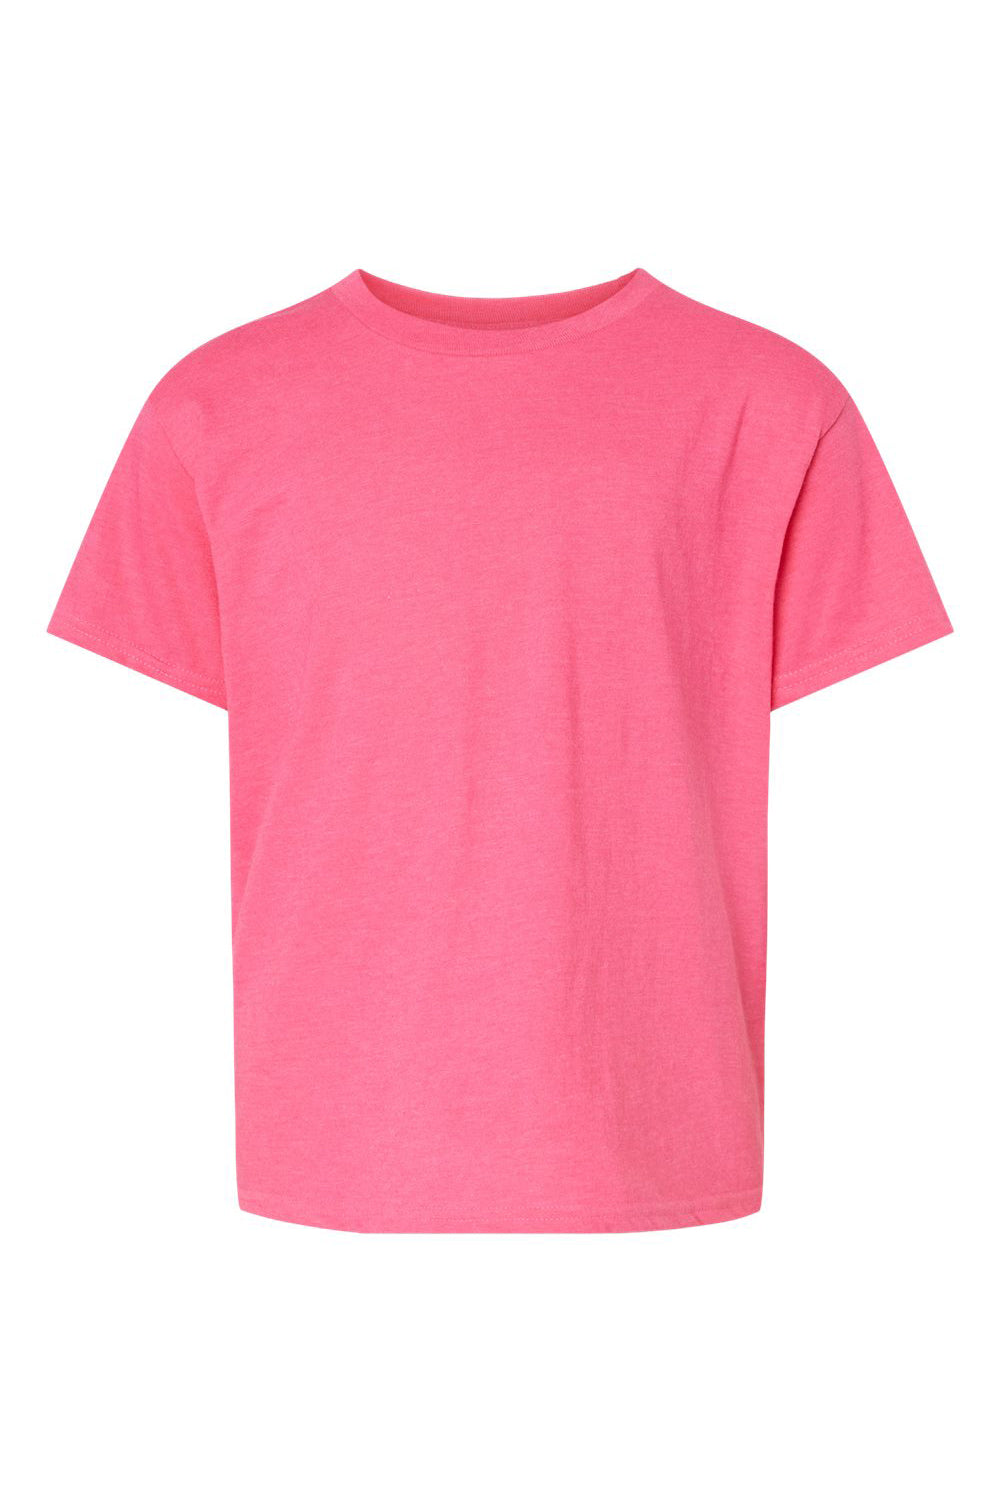 Gildan 67000B Youth Softstyle CVC Short Sleeve Crewneck T-Shirt Pink Lemonade Mist Flat Front